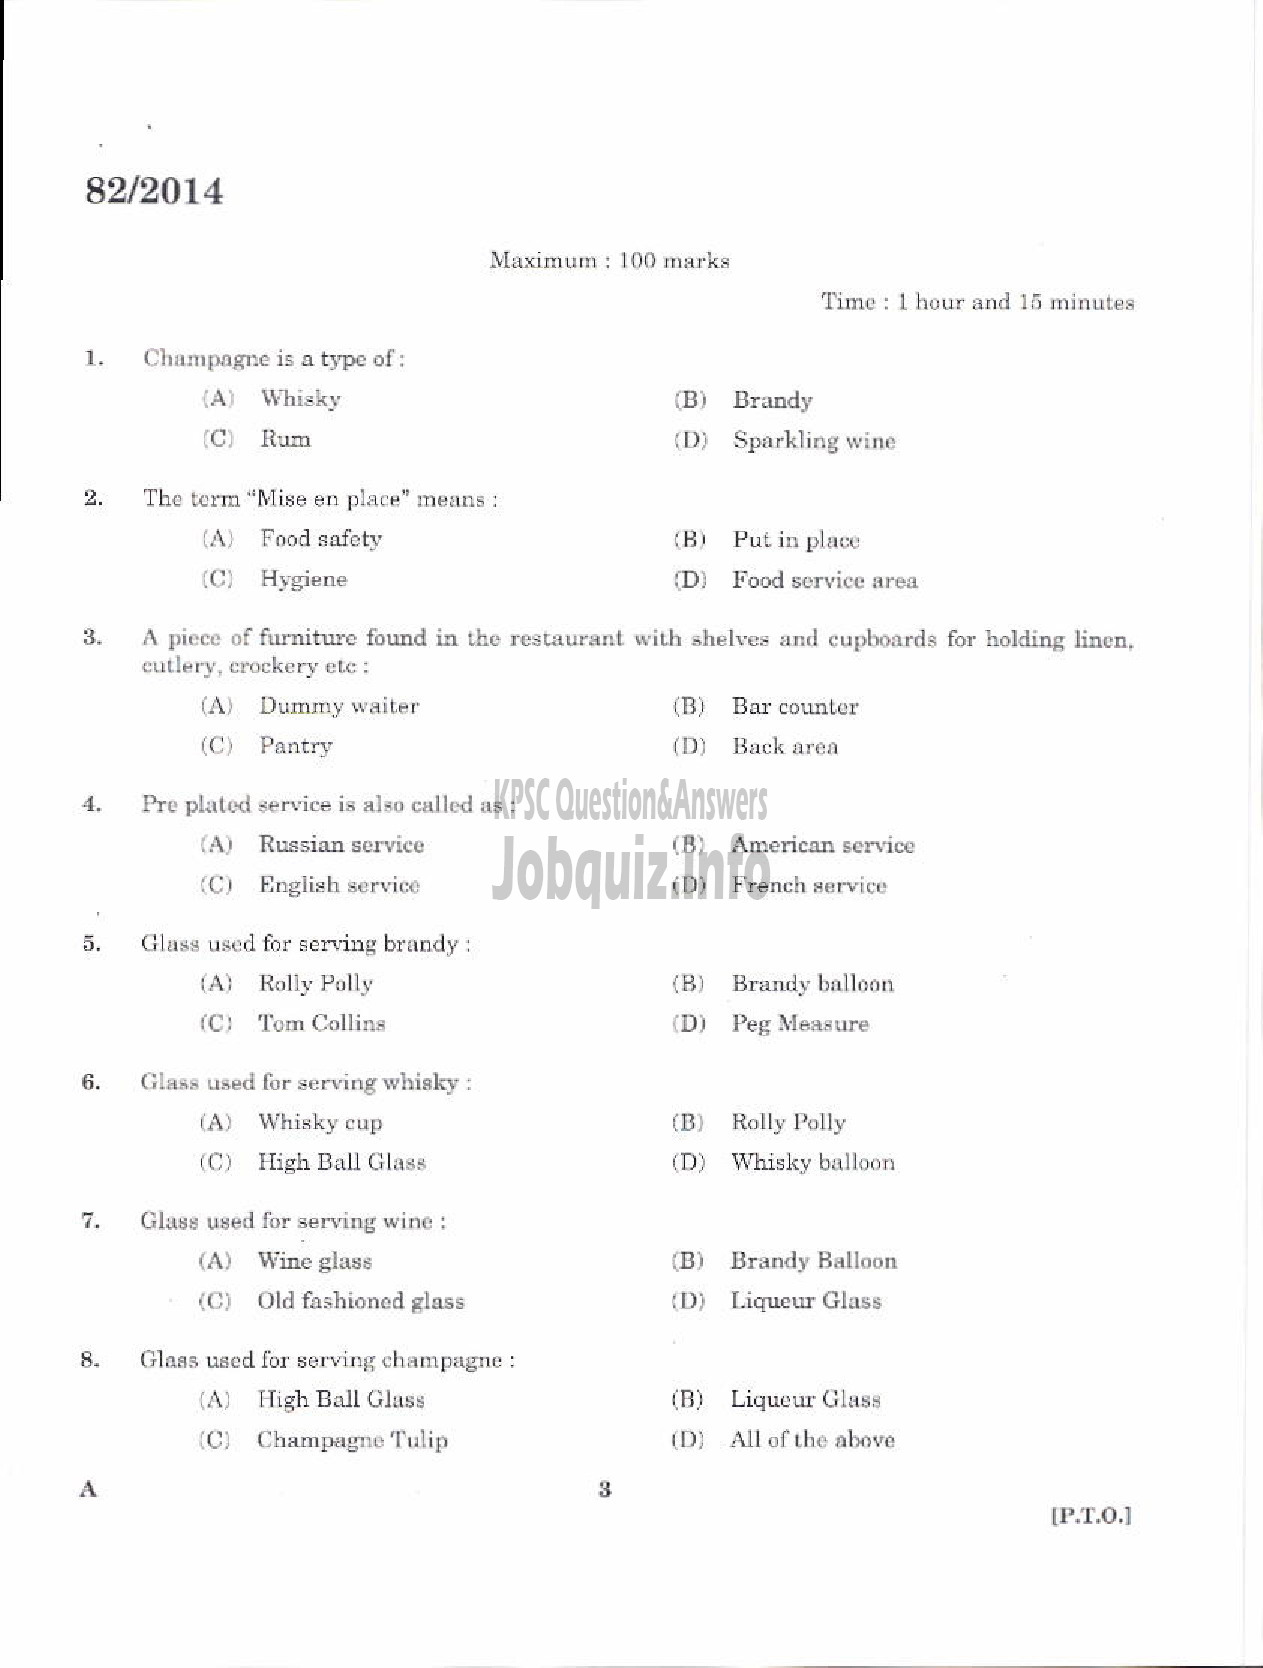 Kerala PSC Question Paper - HOSPITALITY ASSISTANT NCA EZHAVA/MUSLIM TOURISM DEPT PTA AND EKM-1